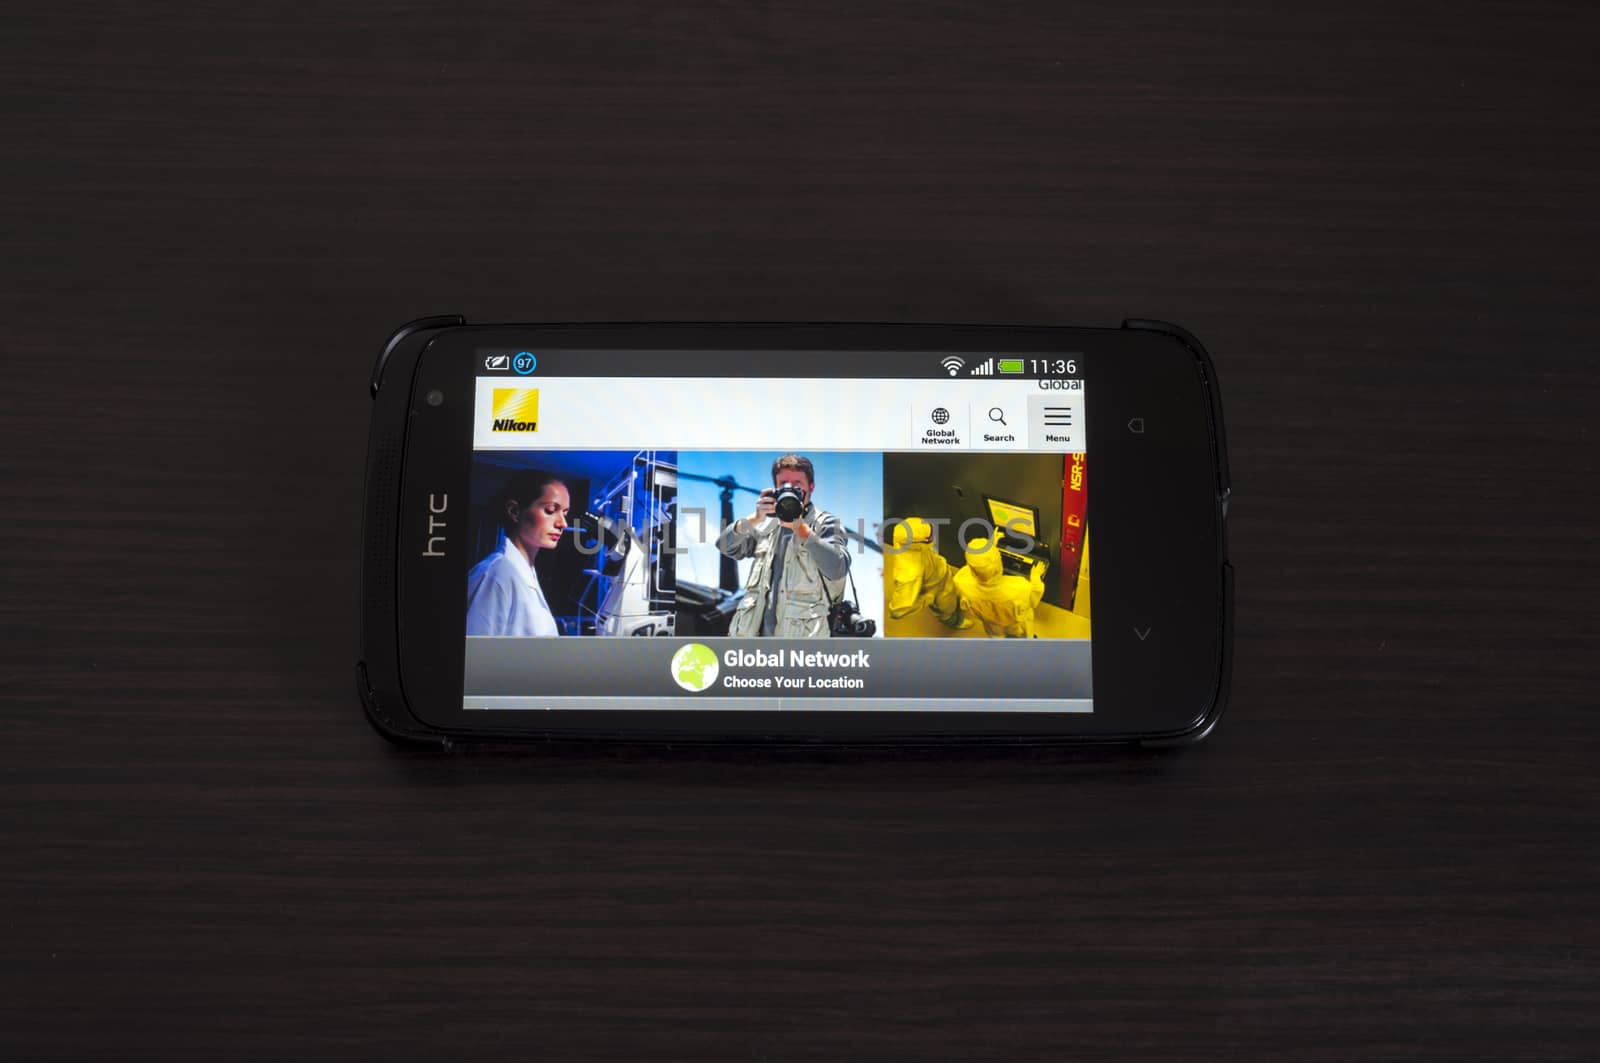 Phone showing the Nikon webpage. by maxmitzu